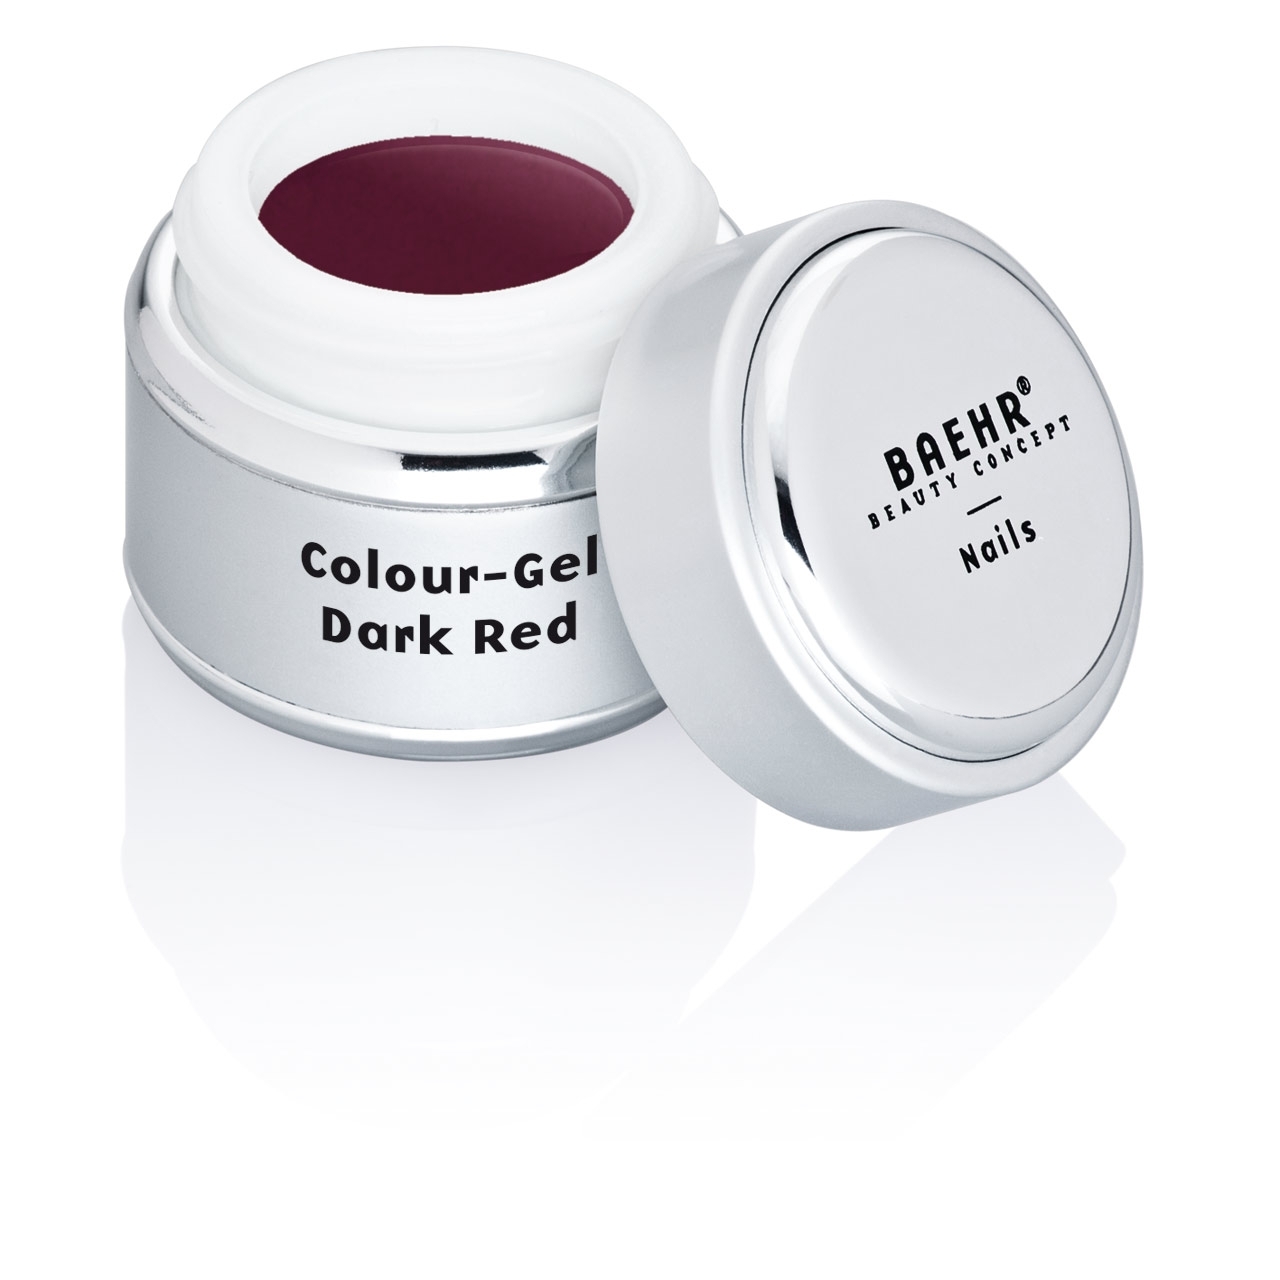 BAEHR BEAUTY CONCEPT - NAILS Colour-Gel Dark Red 5 ml